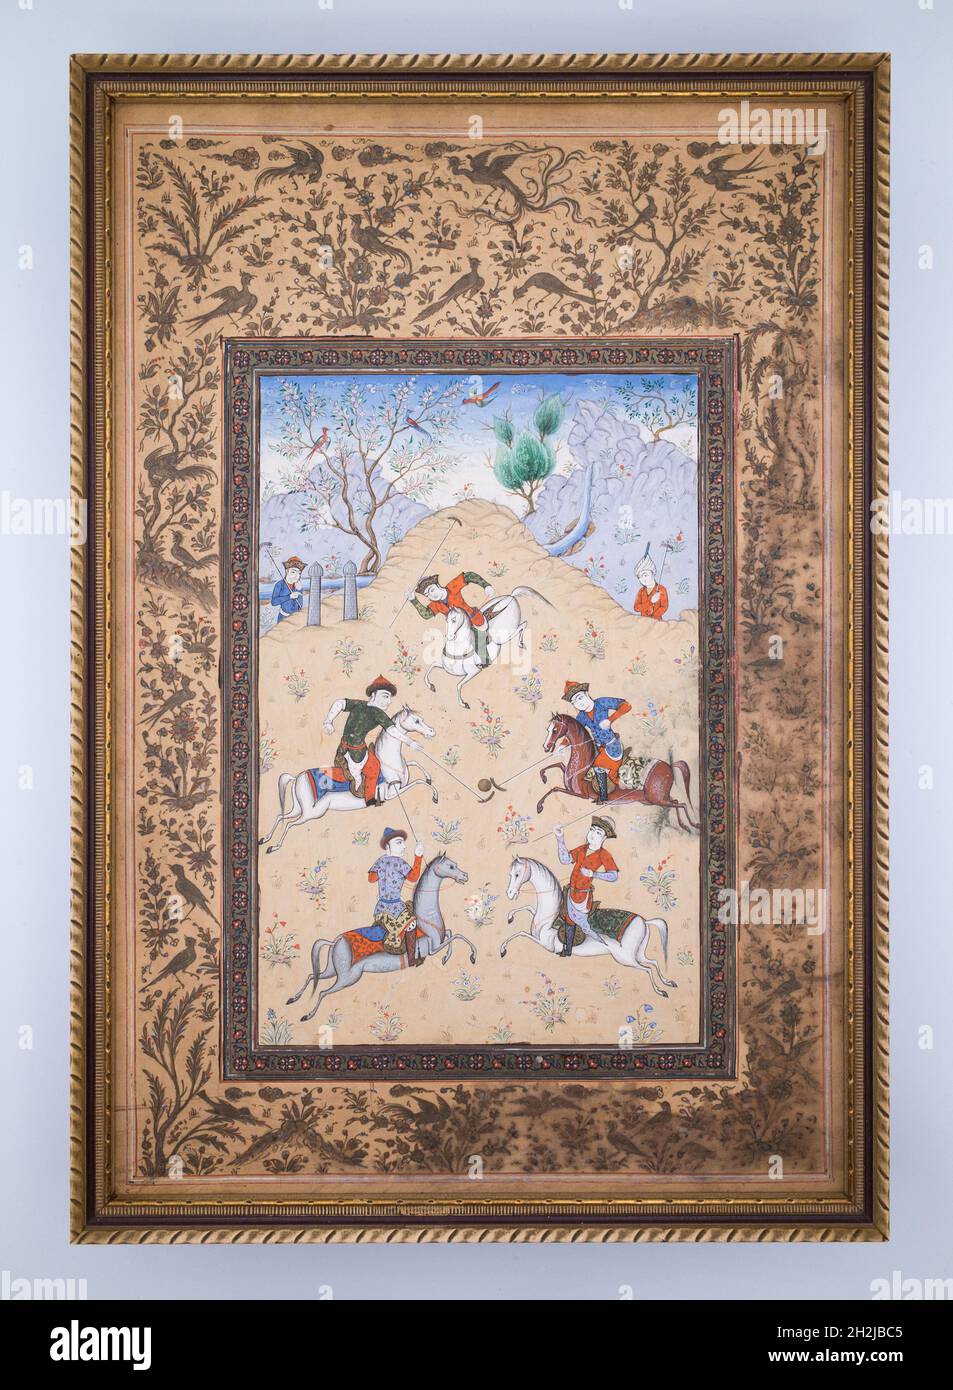 Antique Persian Miniature Painting of Chovgan Polo Game. Folio from ‘Guy O Chaugan’ by Arifi. 19th century Stock Photo